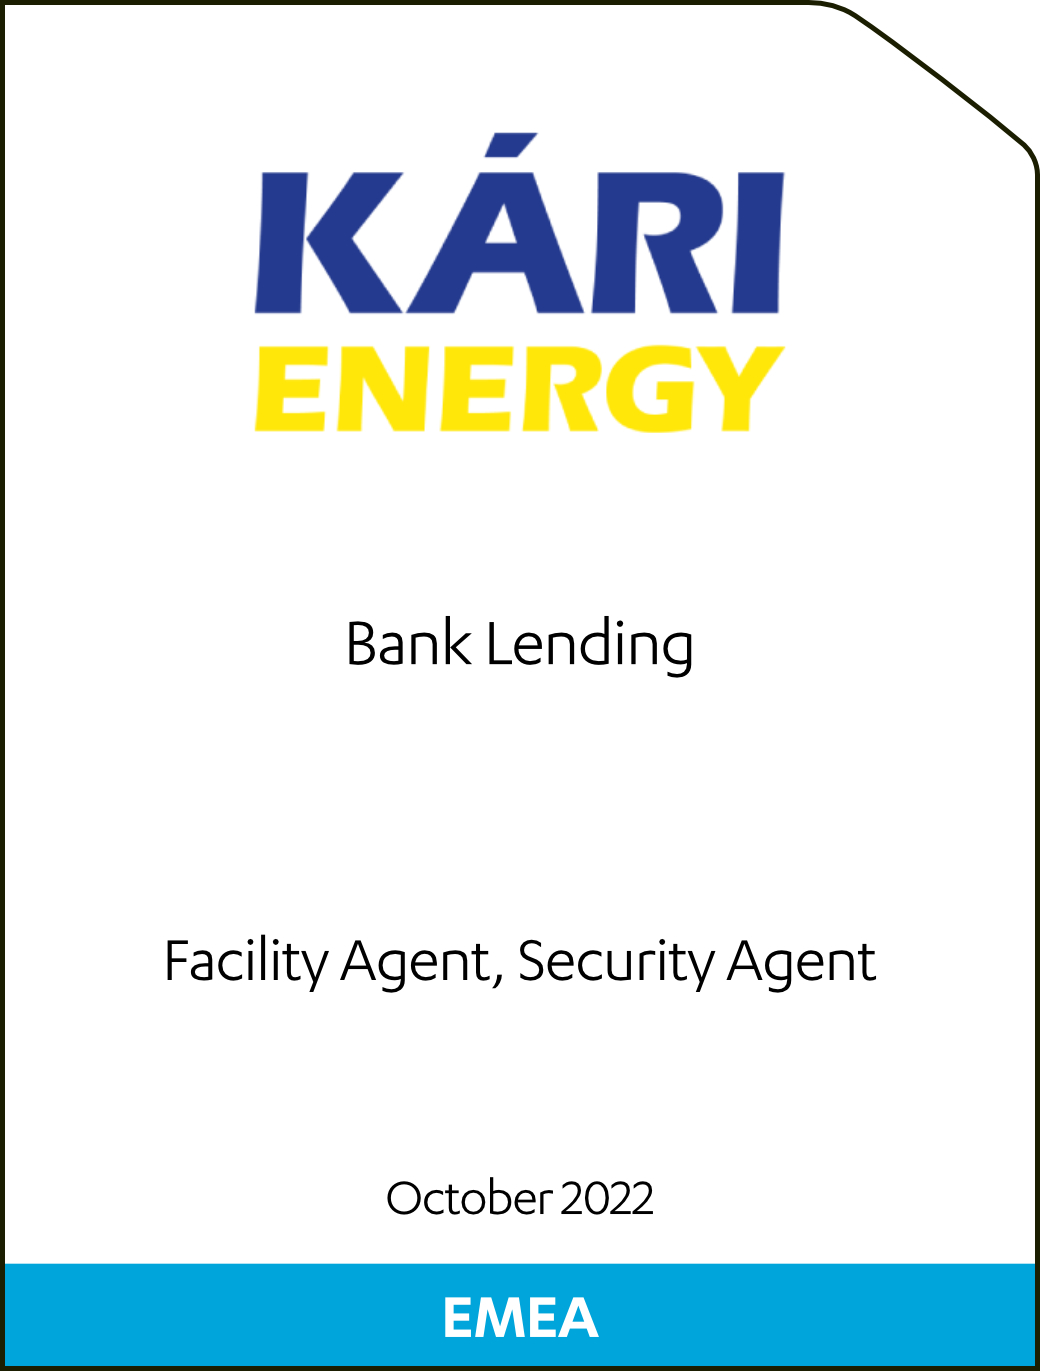 Kari Energy